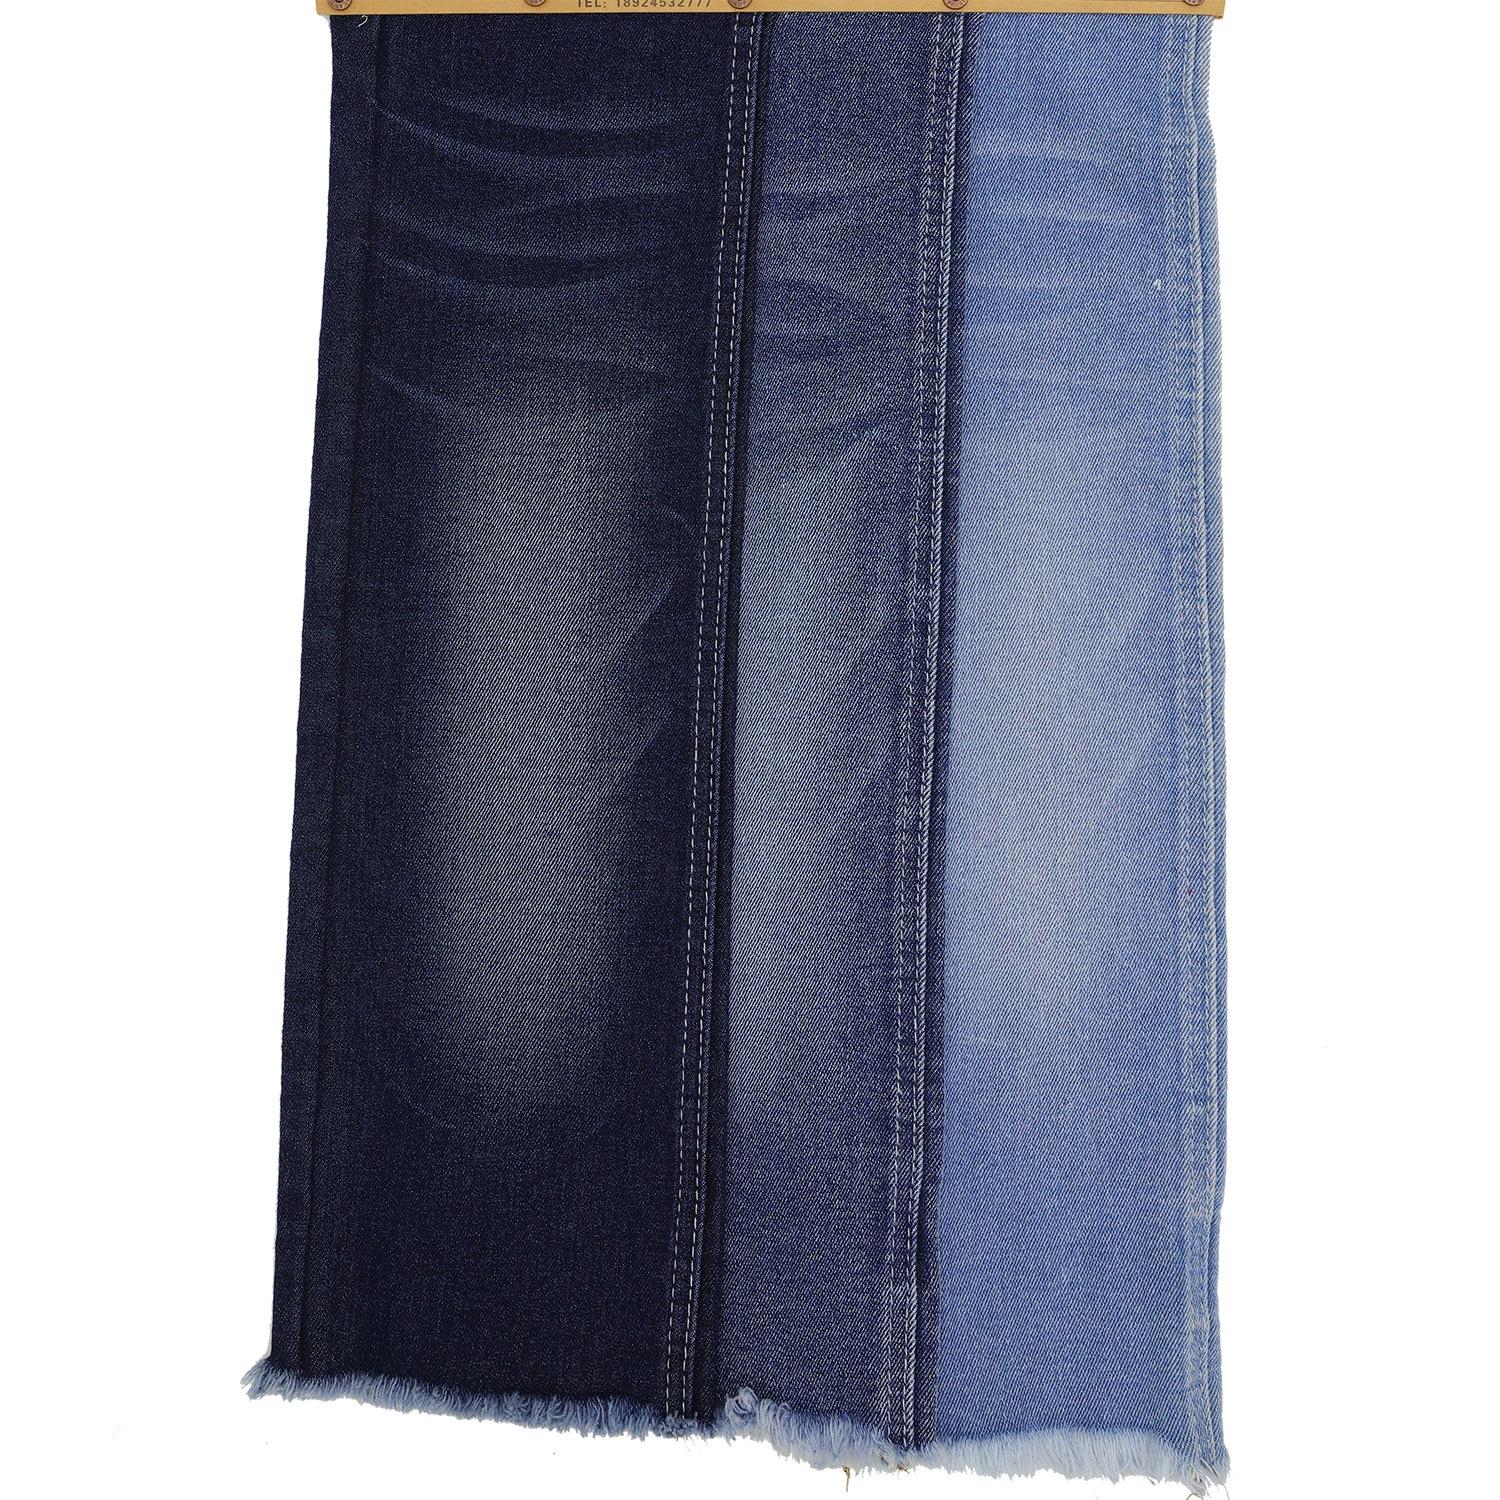 605A-6 60%Cotton 10*21/55 OE Yarn Indigo Color Denim Fabric Wholesale 1